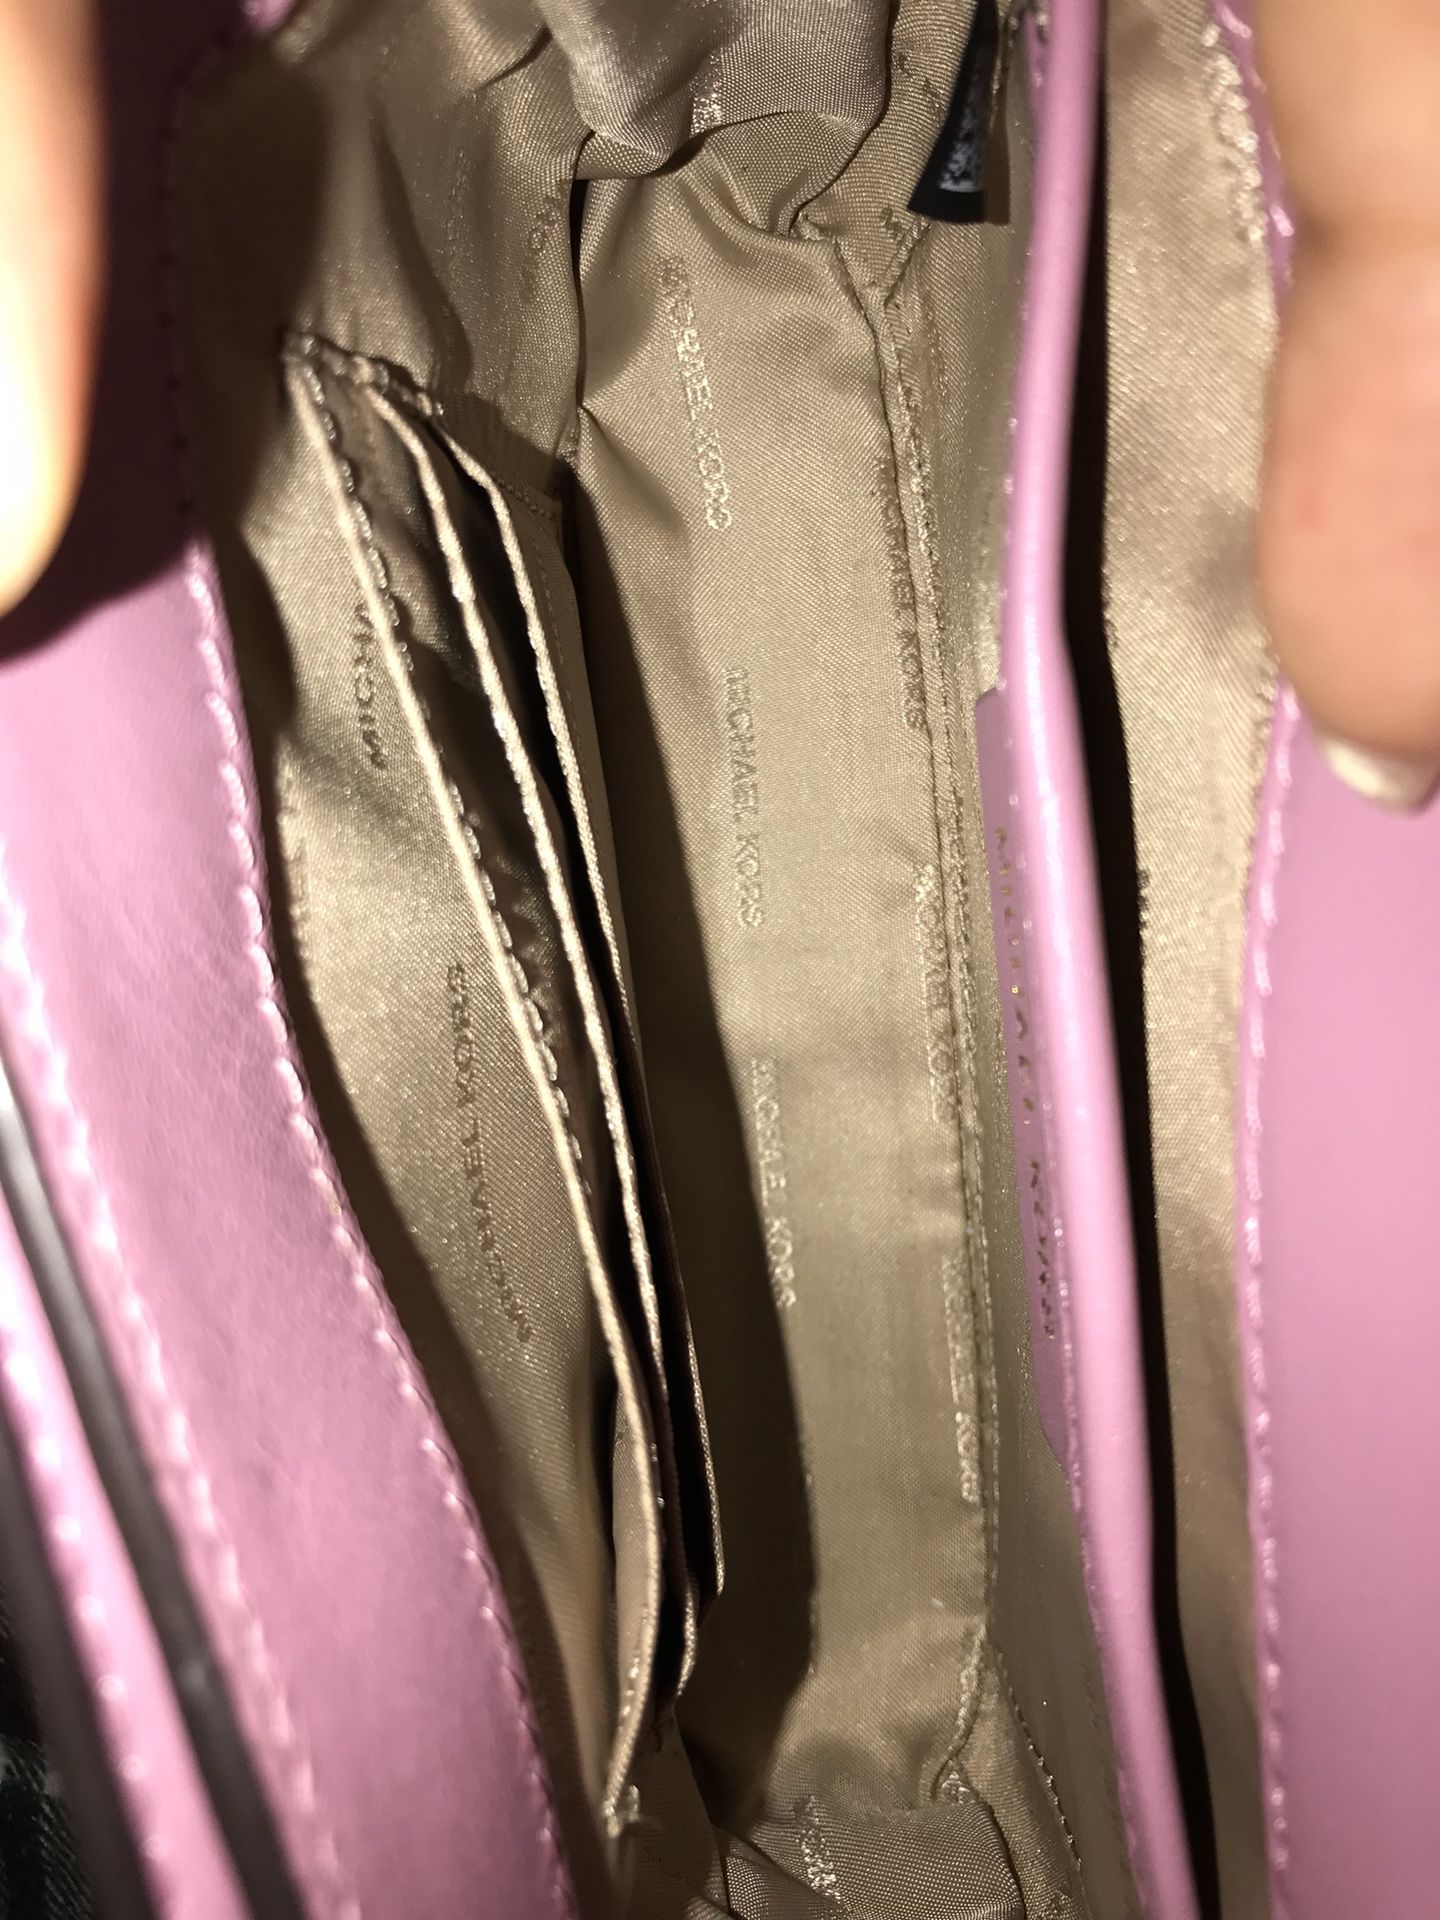 Michael Kors Jade Soft Pink Medium Gusset Clutch Crossbody Bag for Sale in  Lake Worth, FL - OfferUp